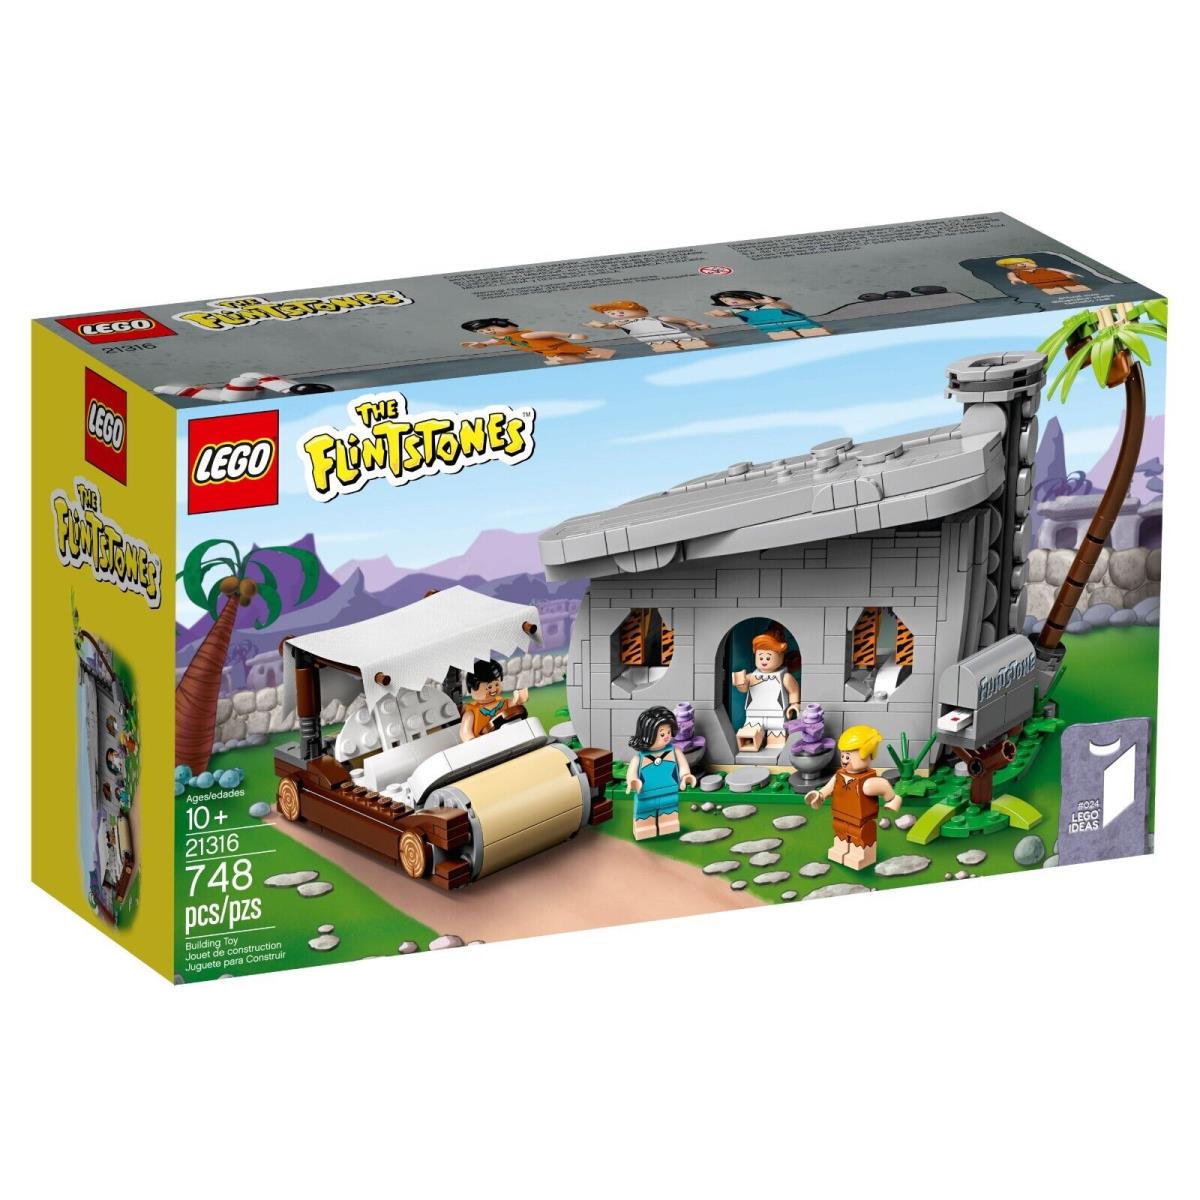 Lego 21316 The Flintstones Ideas Retired Box